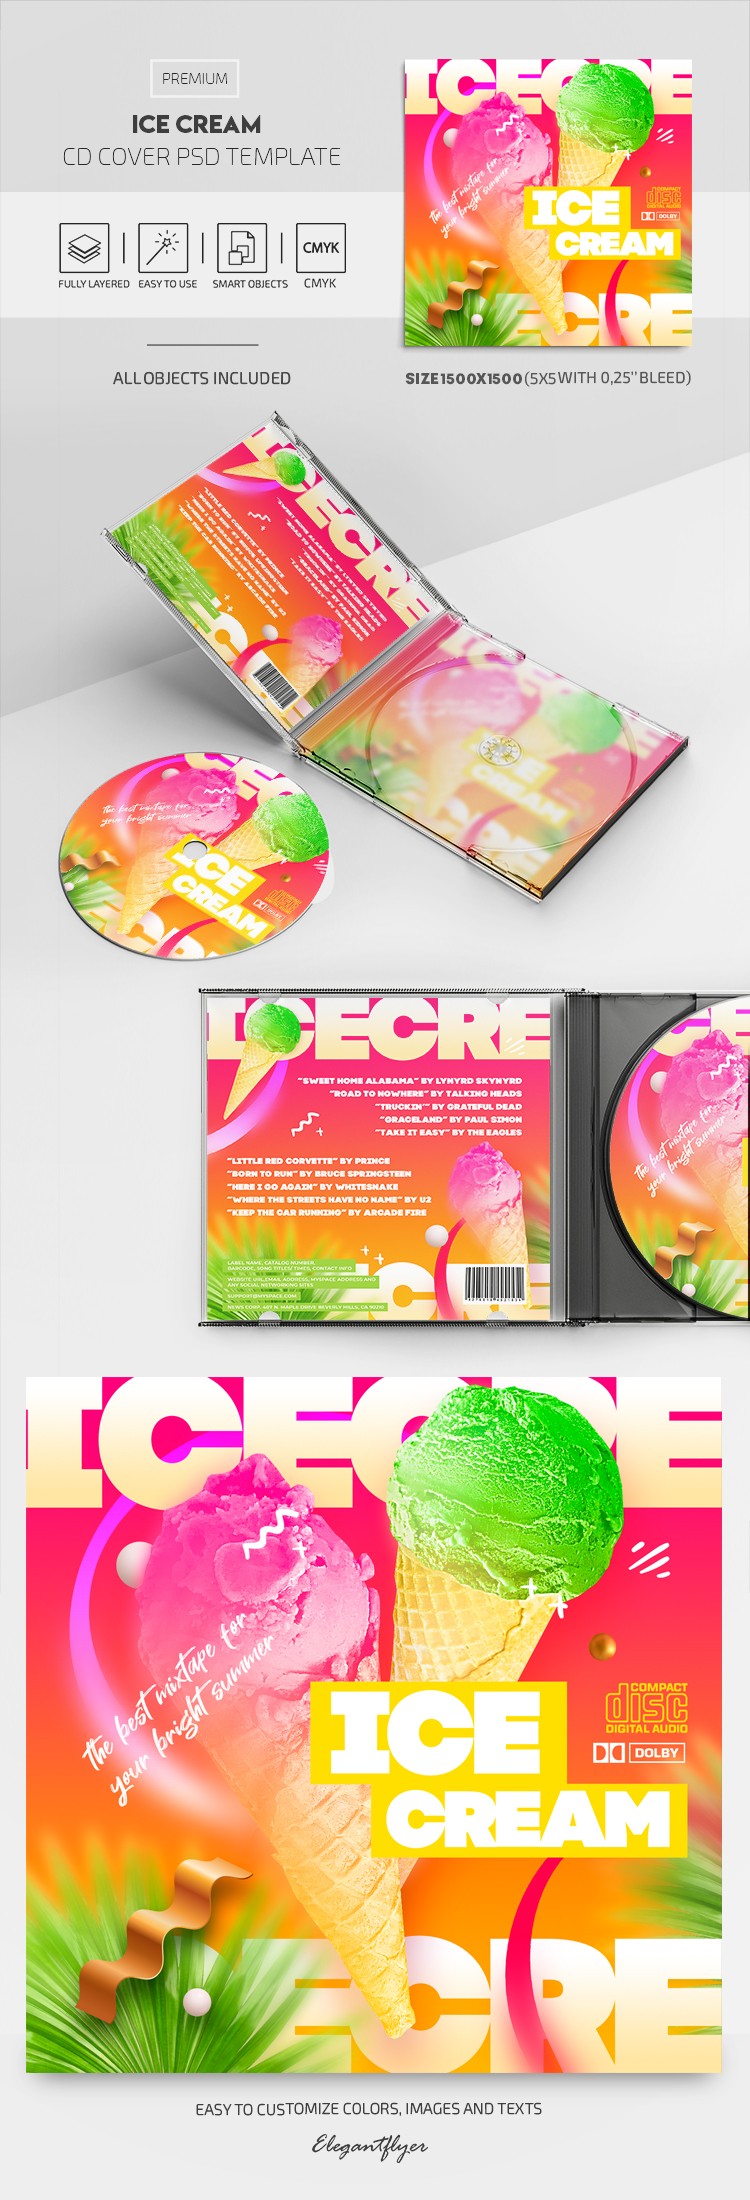 Eiscreme CD Cover by ElegantFlyer